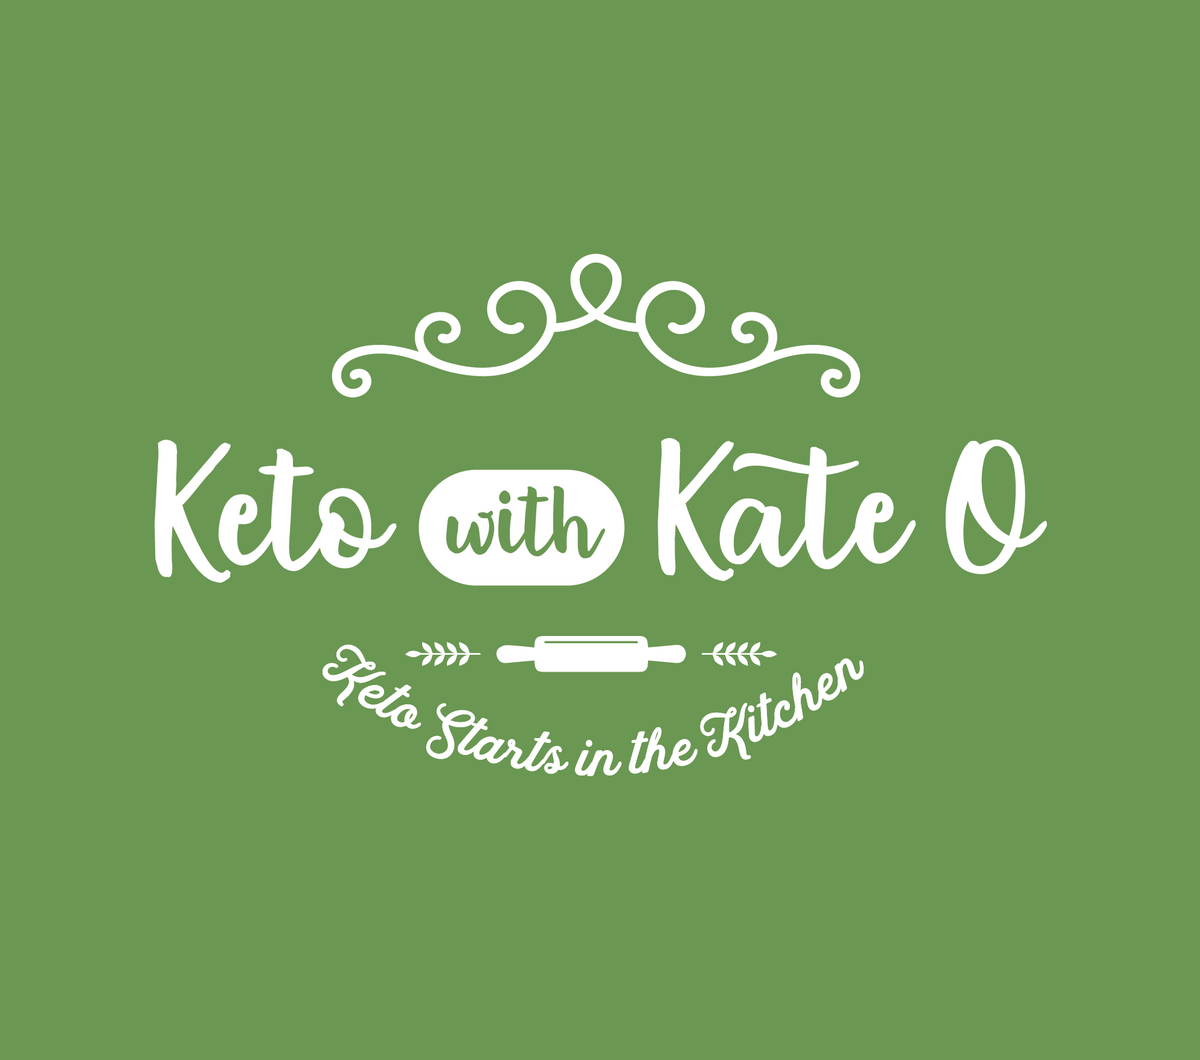 Keto with Kate O